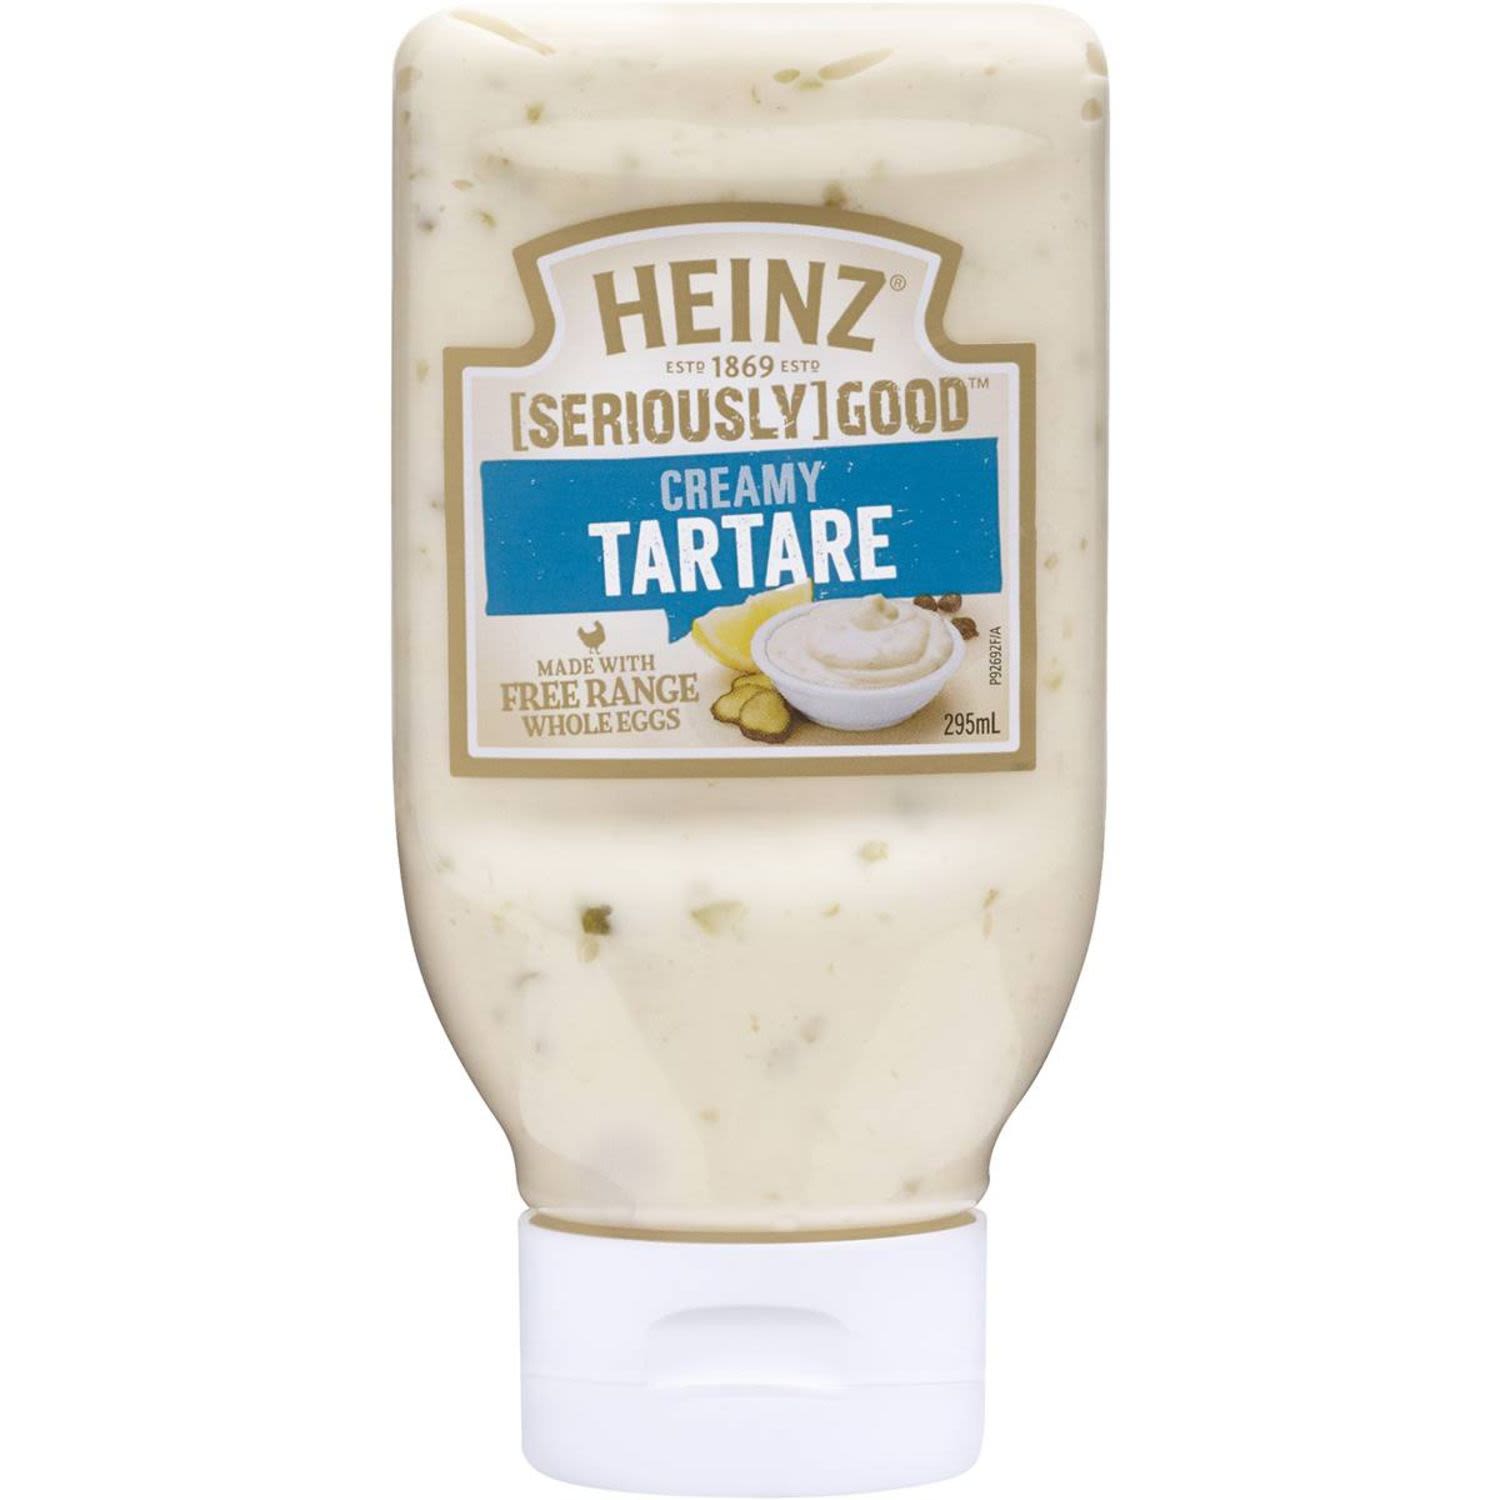 Heinz [Seriously] Good Creamy Tartare, 295 Millilitre